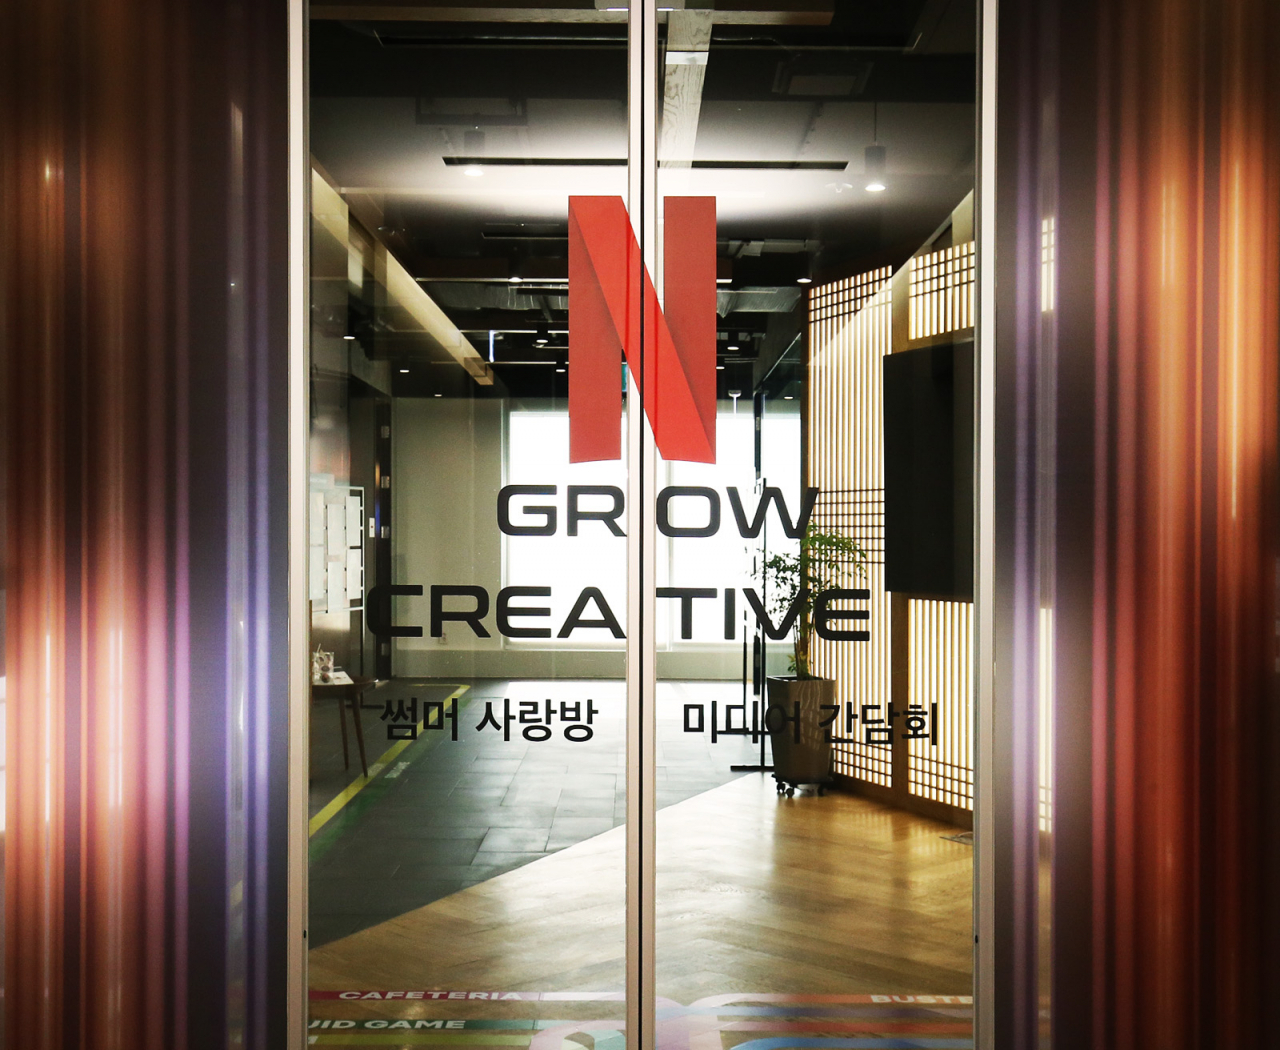 Netflix Korea's office (Netflix)